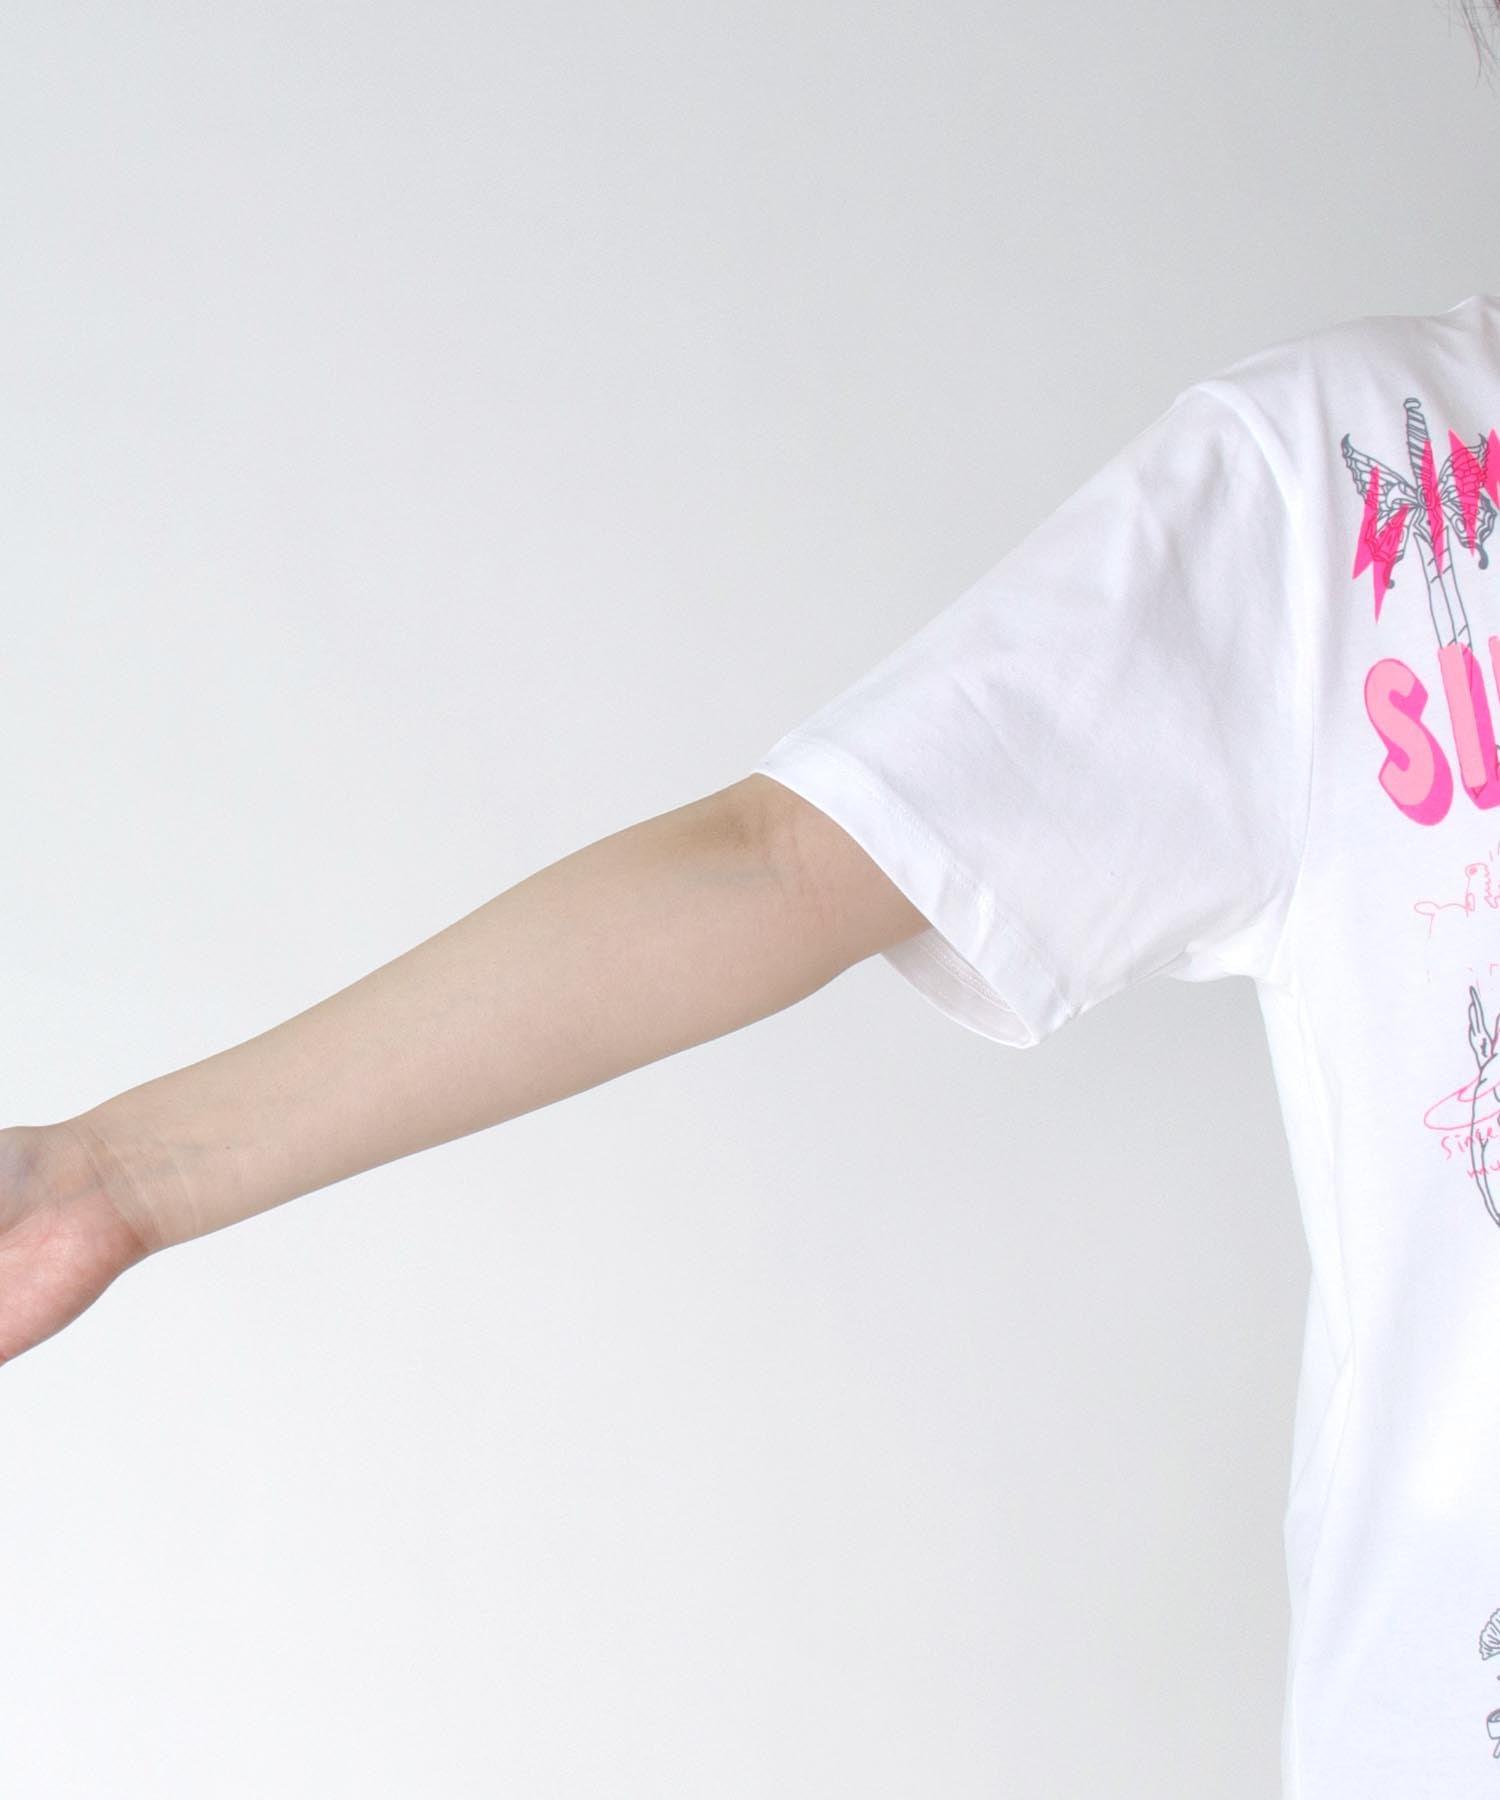 【一部店舗限定発売】SIMEON FARRA / SRIBLE TATTOO T-shirt